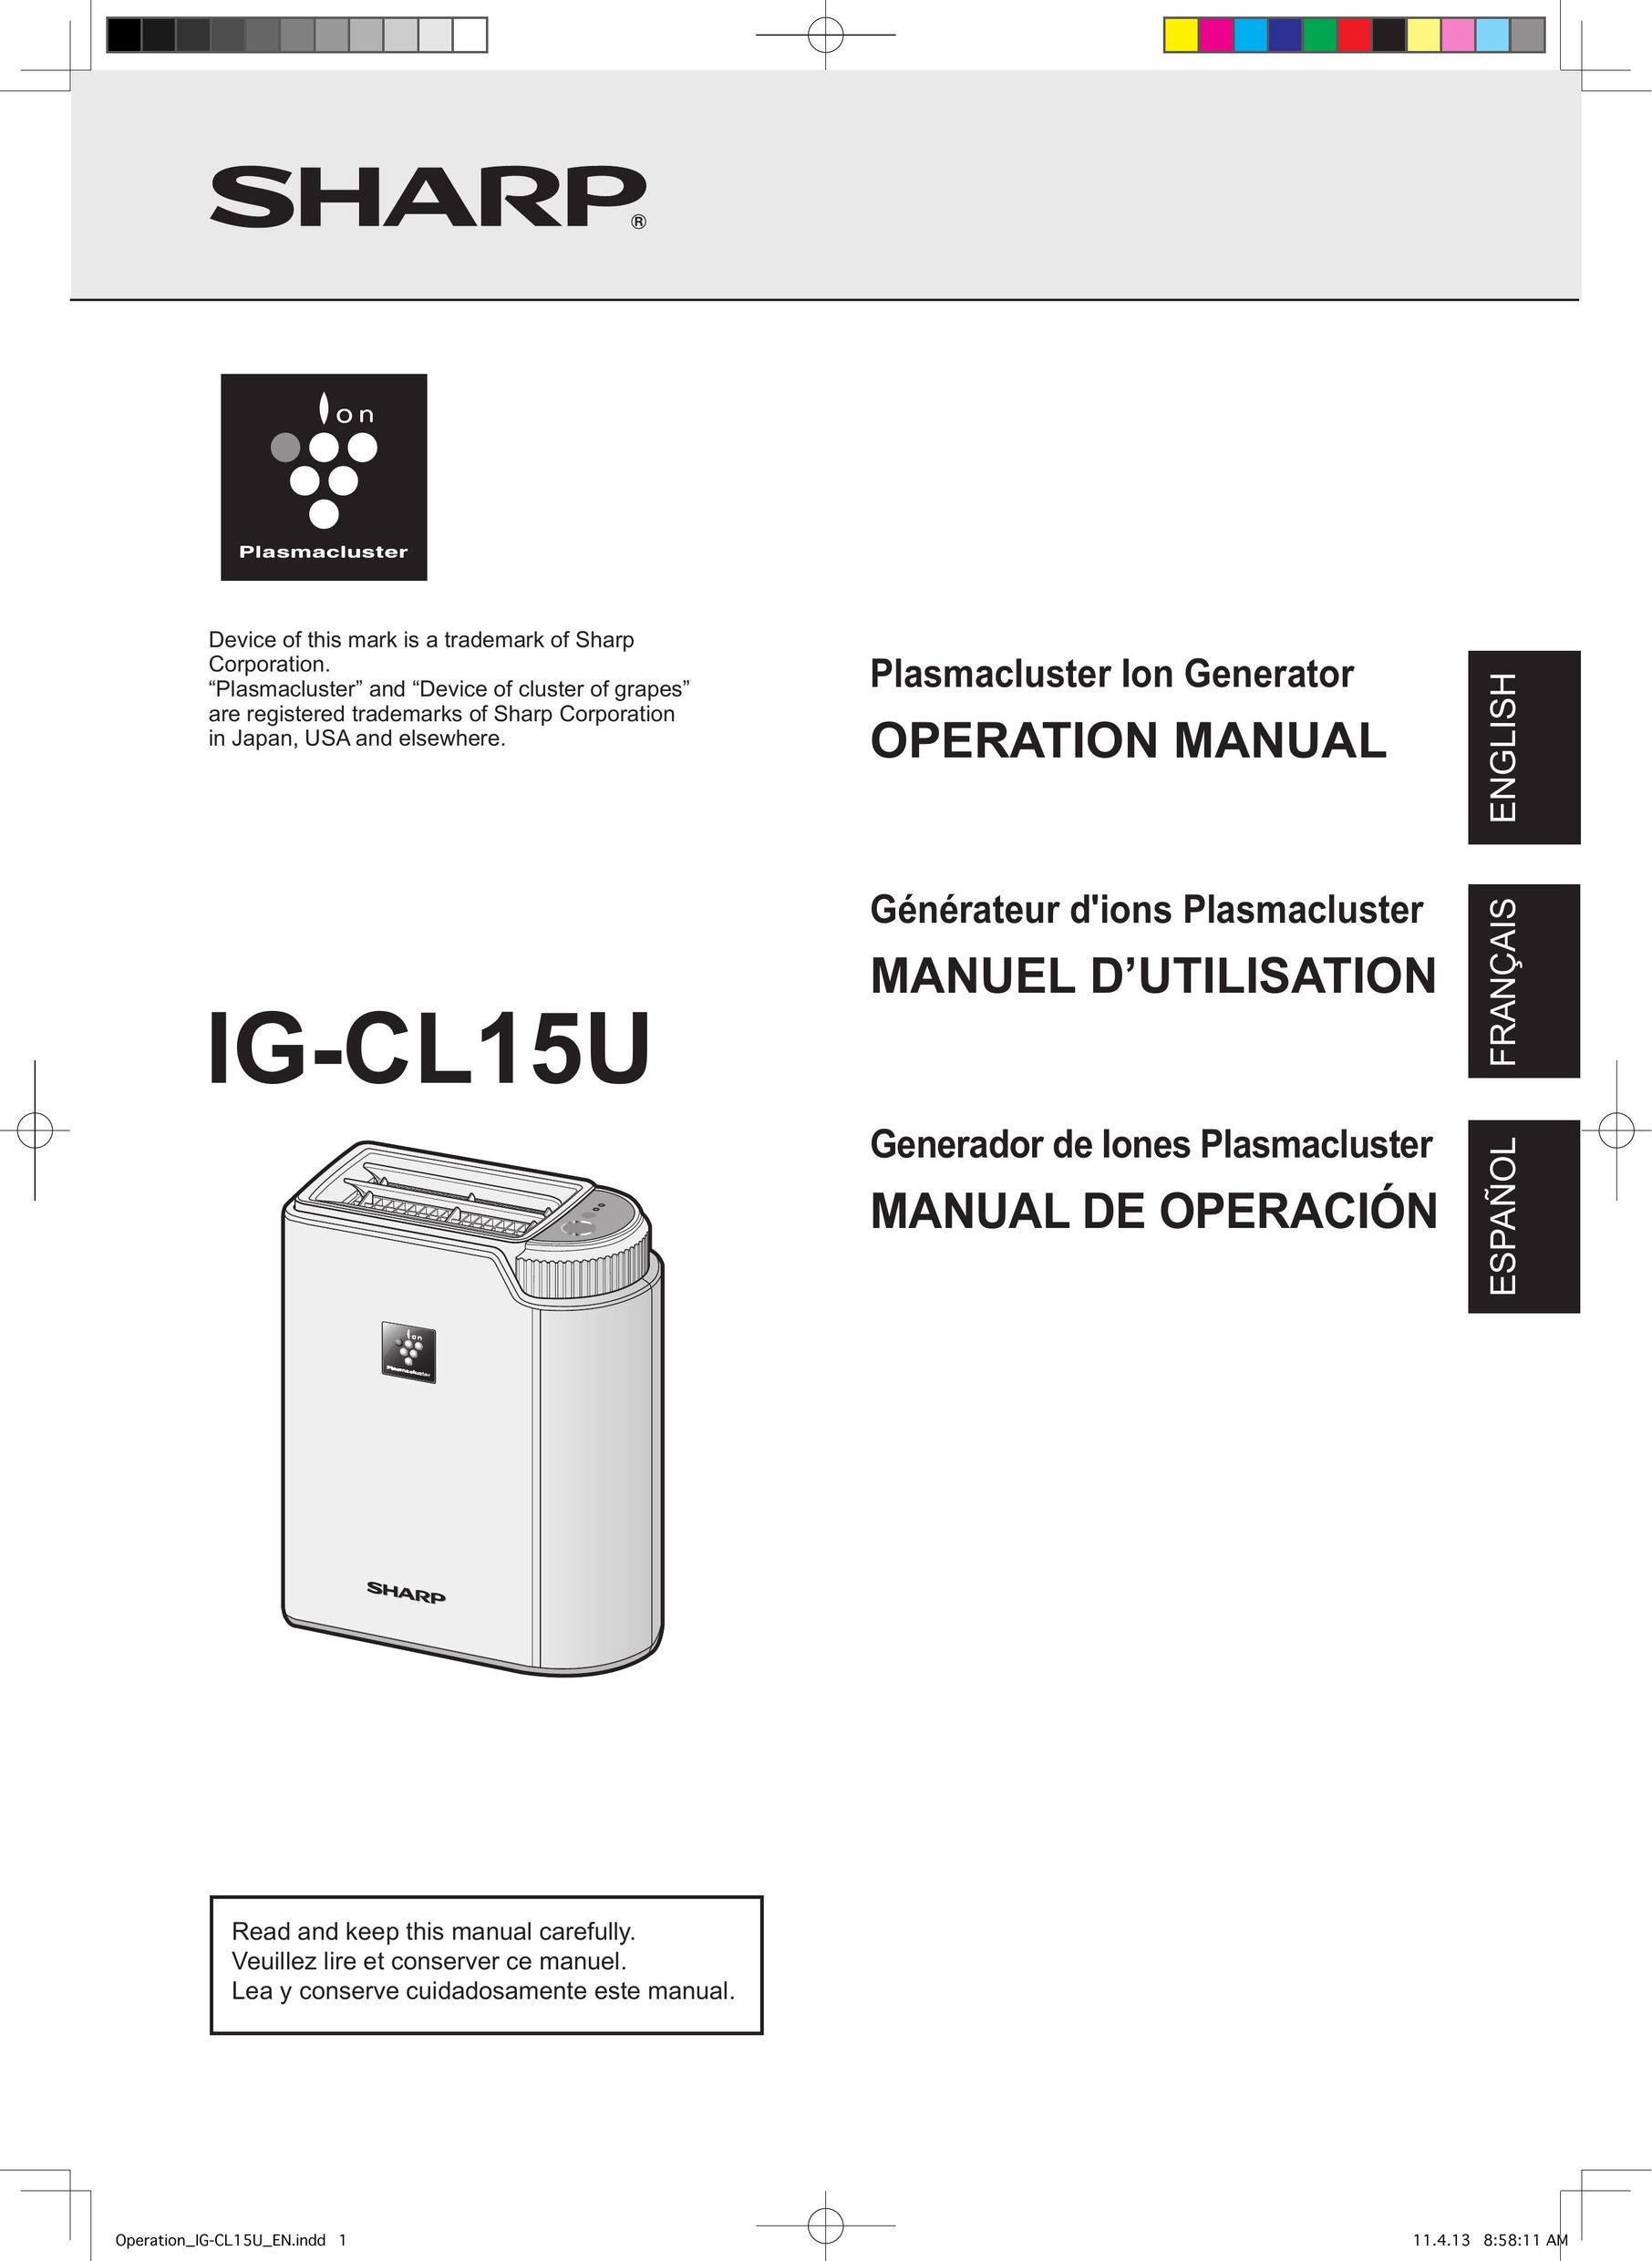 Sharp IG-CL15U Air Cleaner User Manual